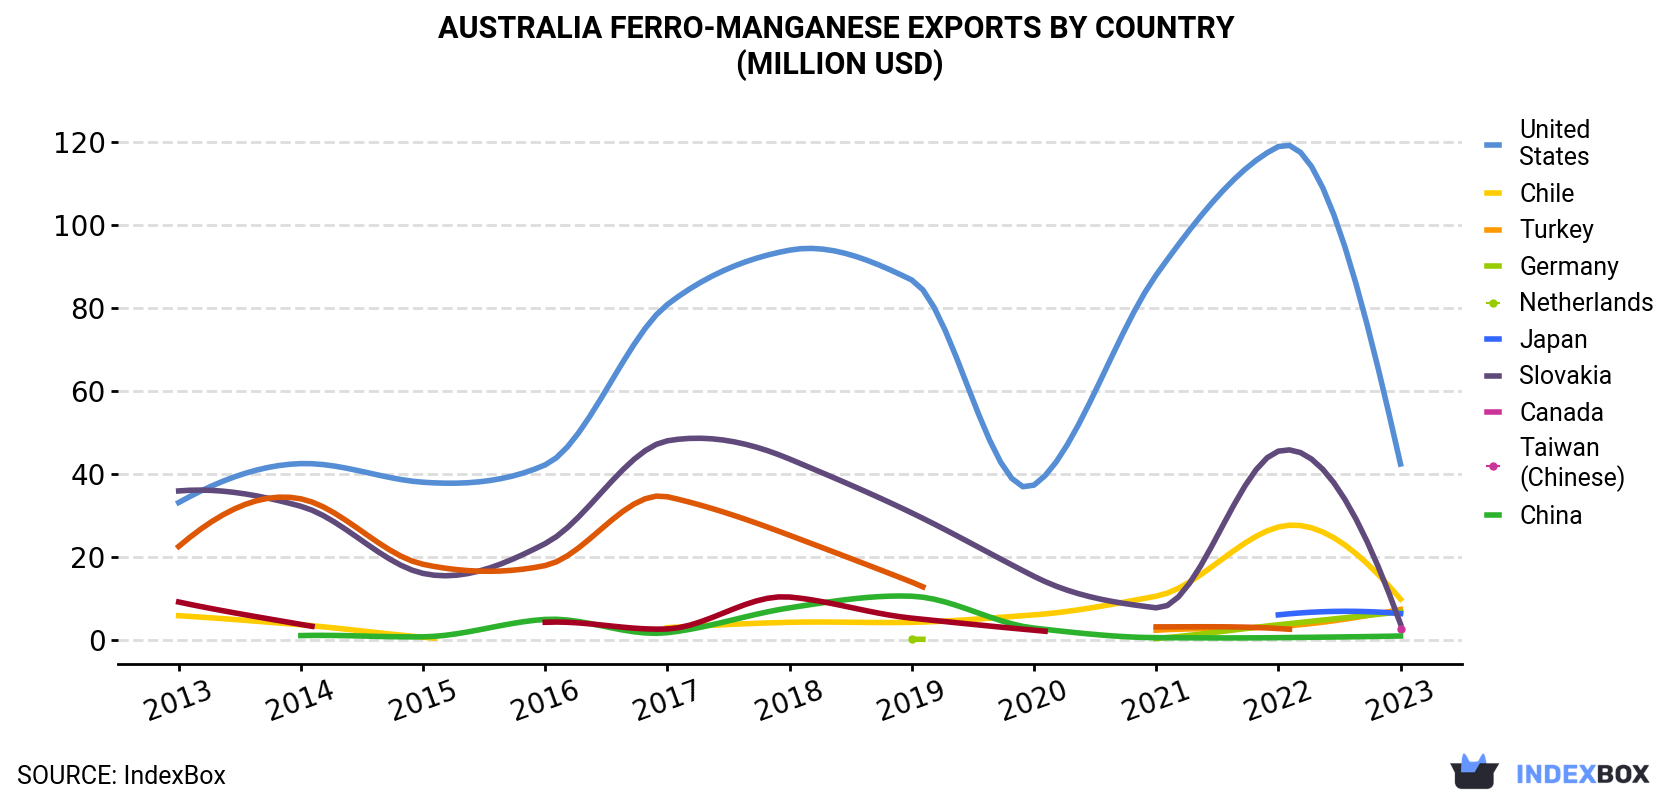 Australia Ferro-Manganese Exports By Country (Million USD)